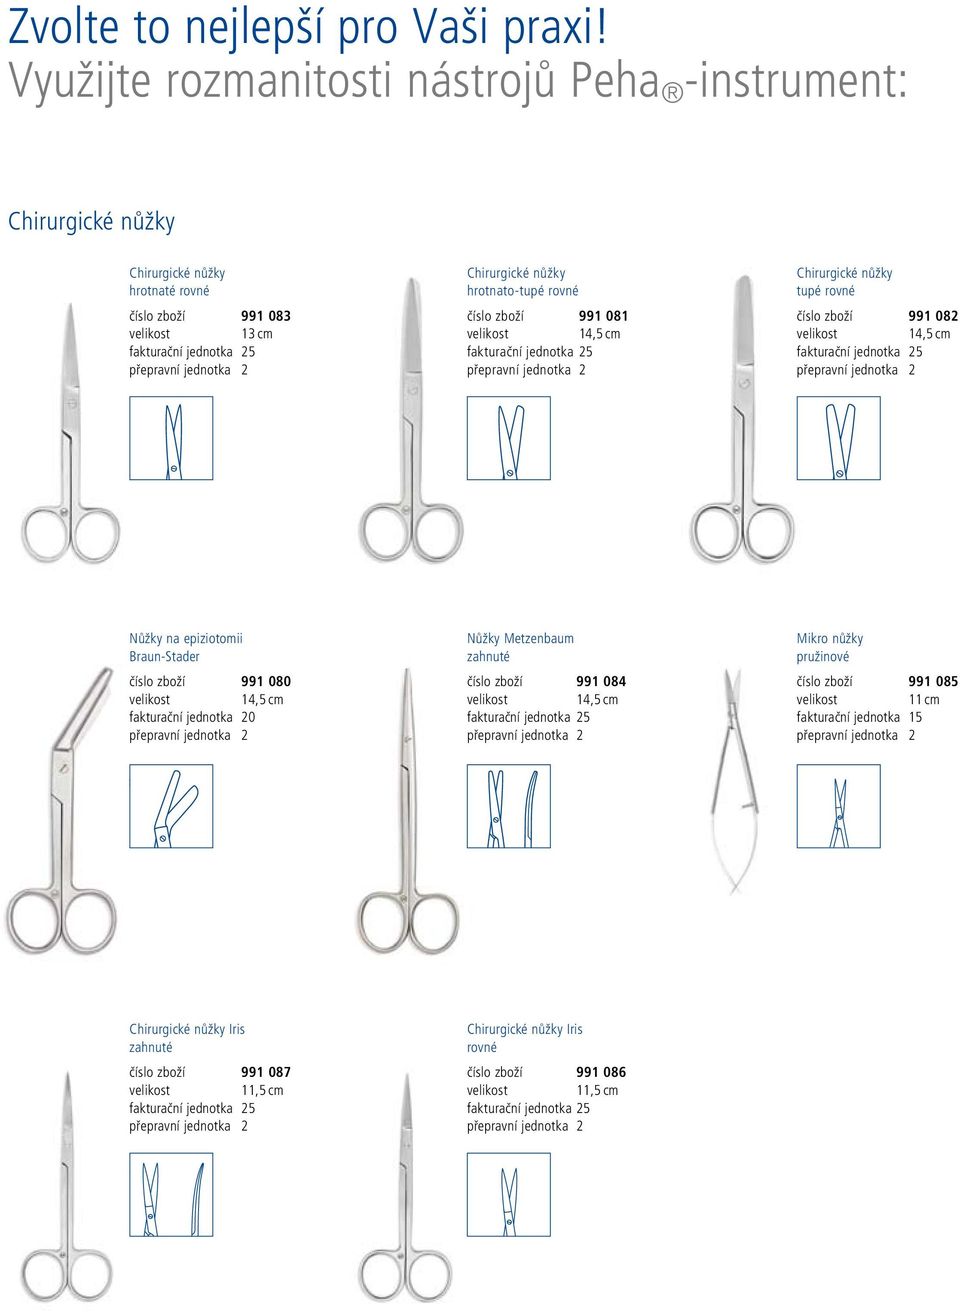 Precizní kvalita a zaručená čistota Jednorázové chirurgické nástroje Peha  -instrument - PDF Stažení zdarma